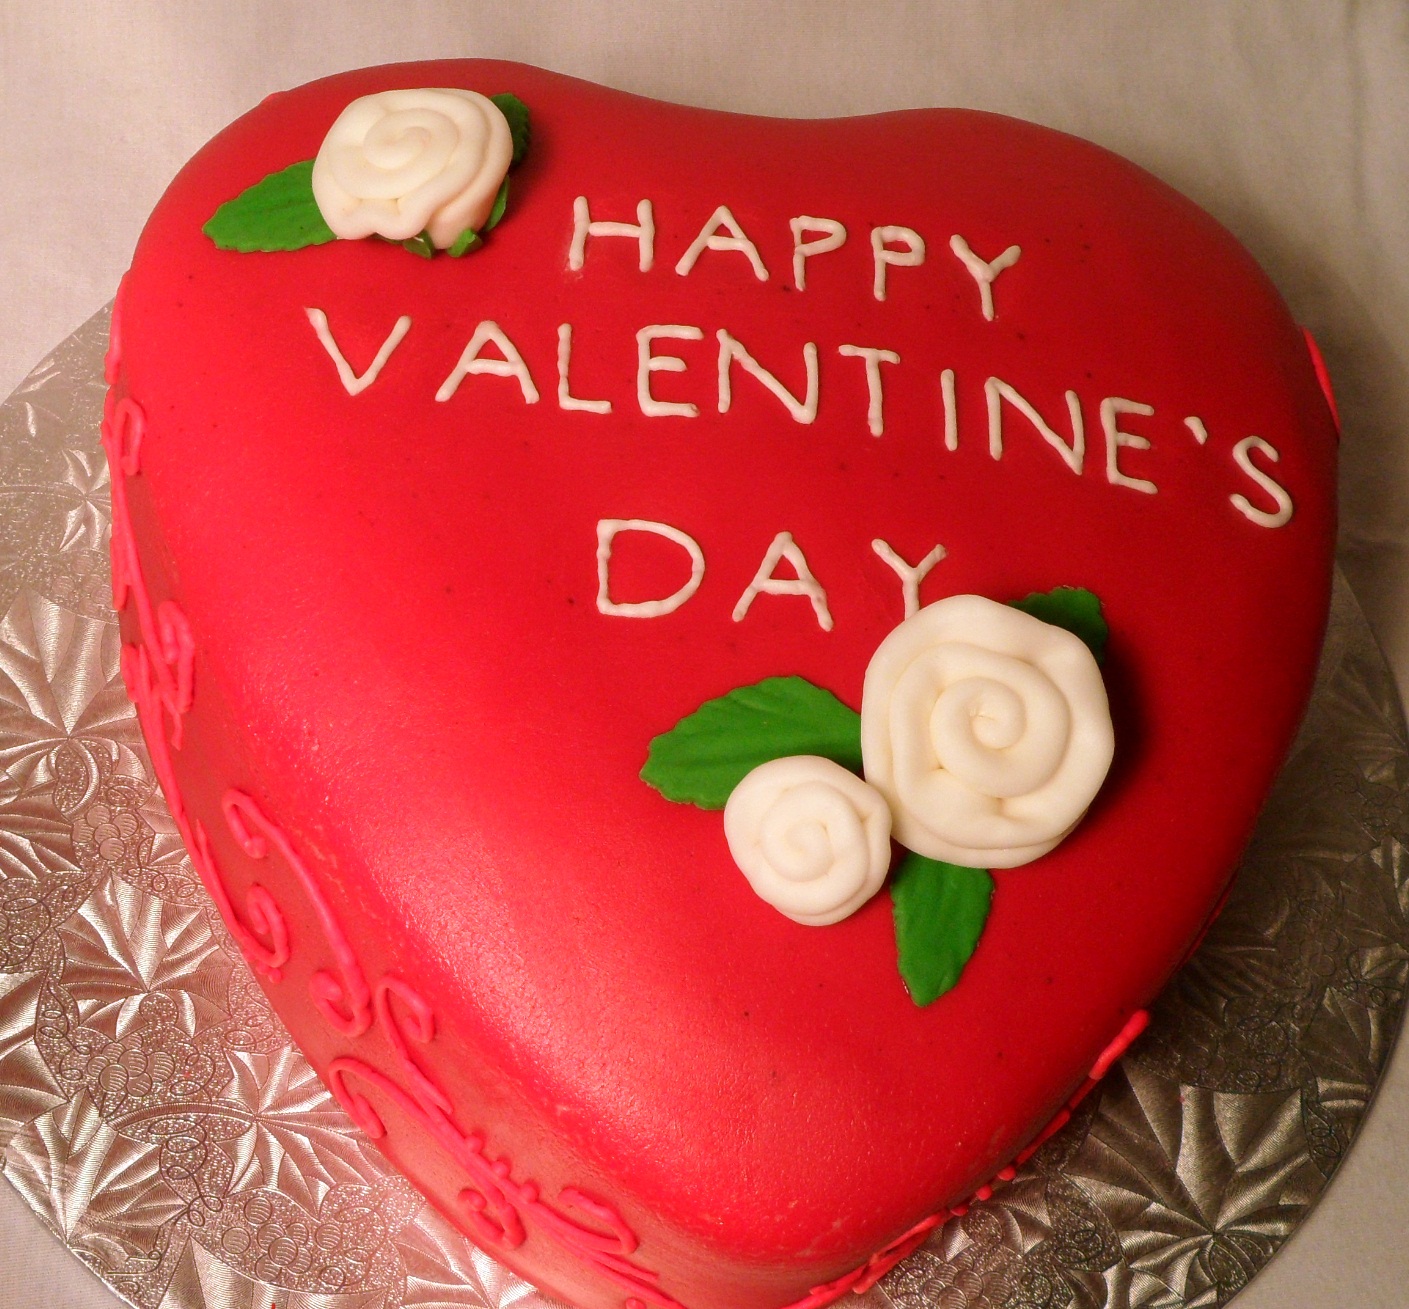 Valentine's Day Cake